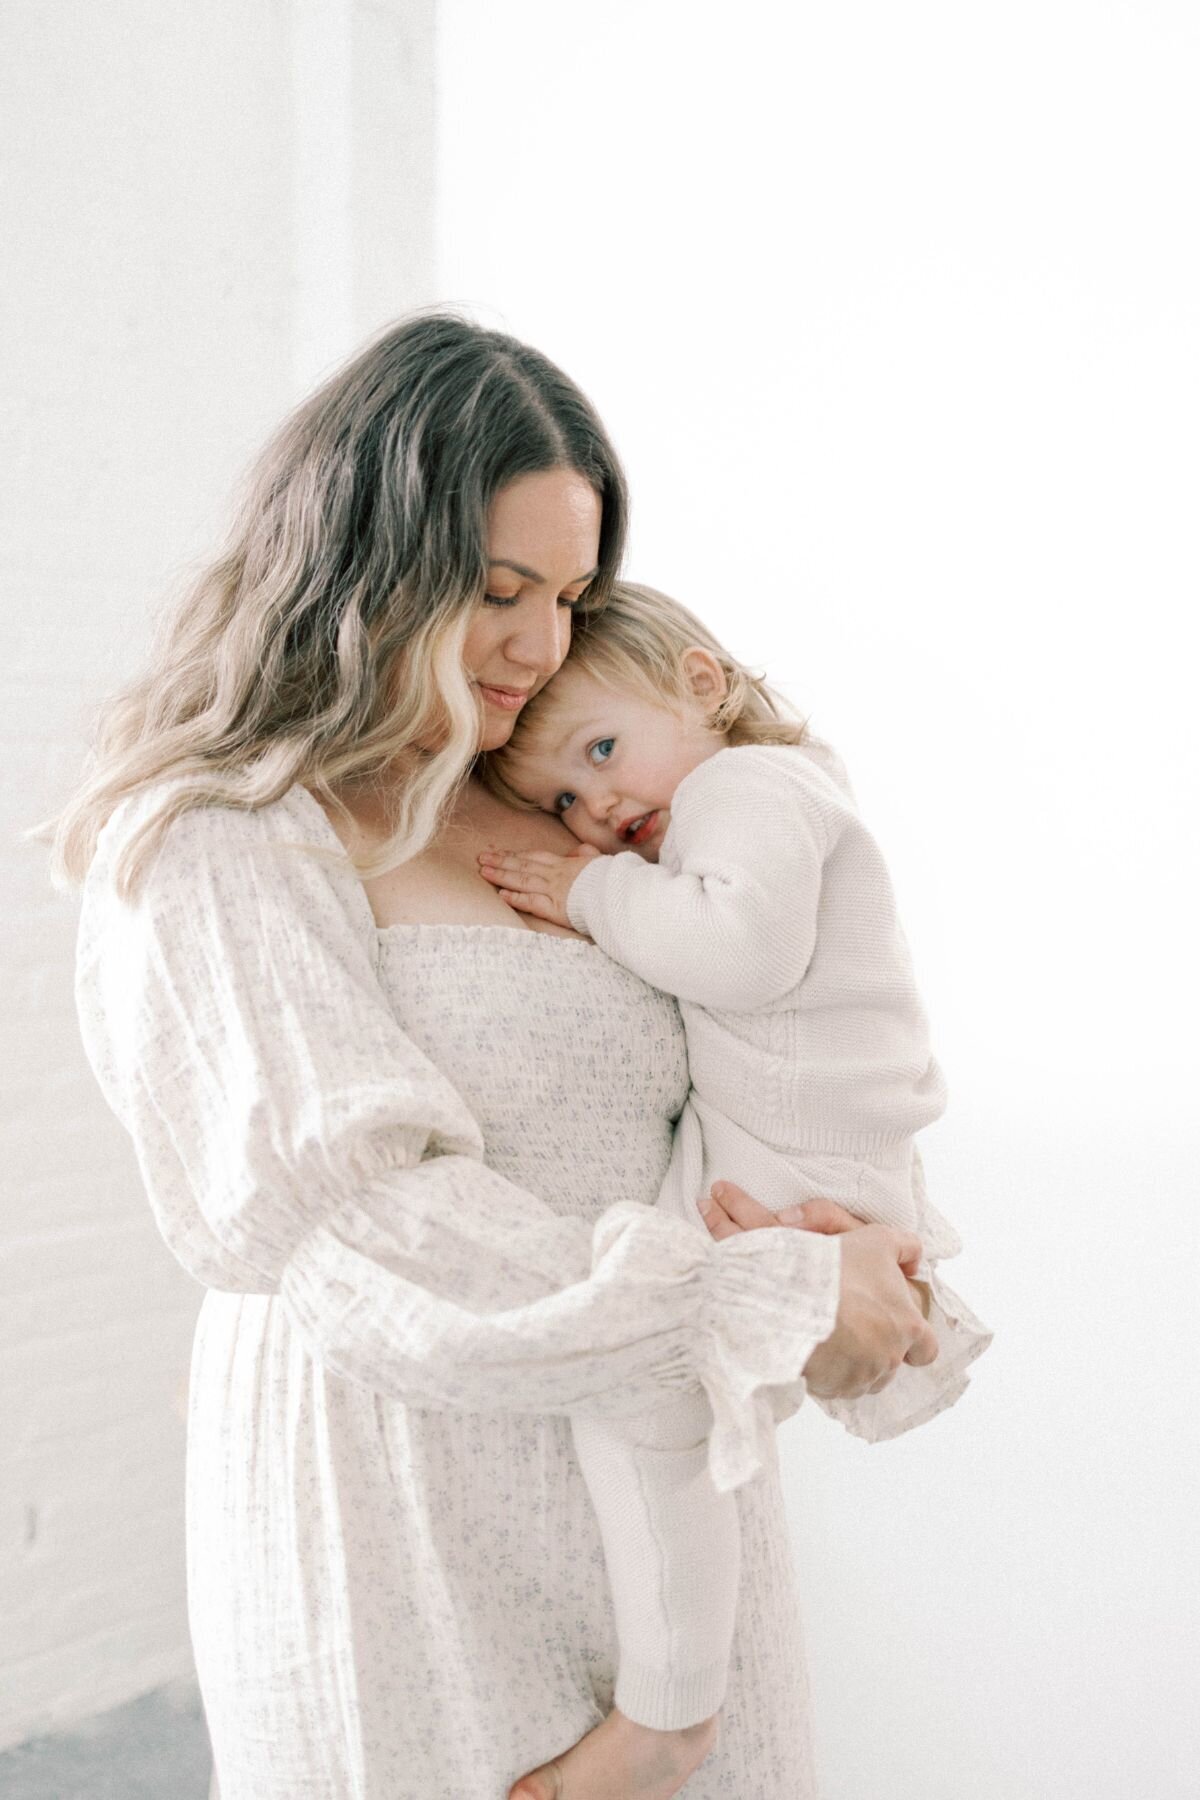 Jacob & Brielle Photography - Motherhood Photography